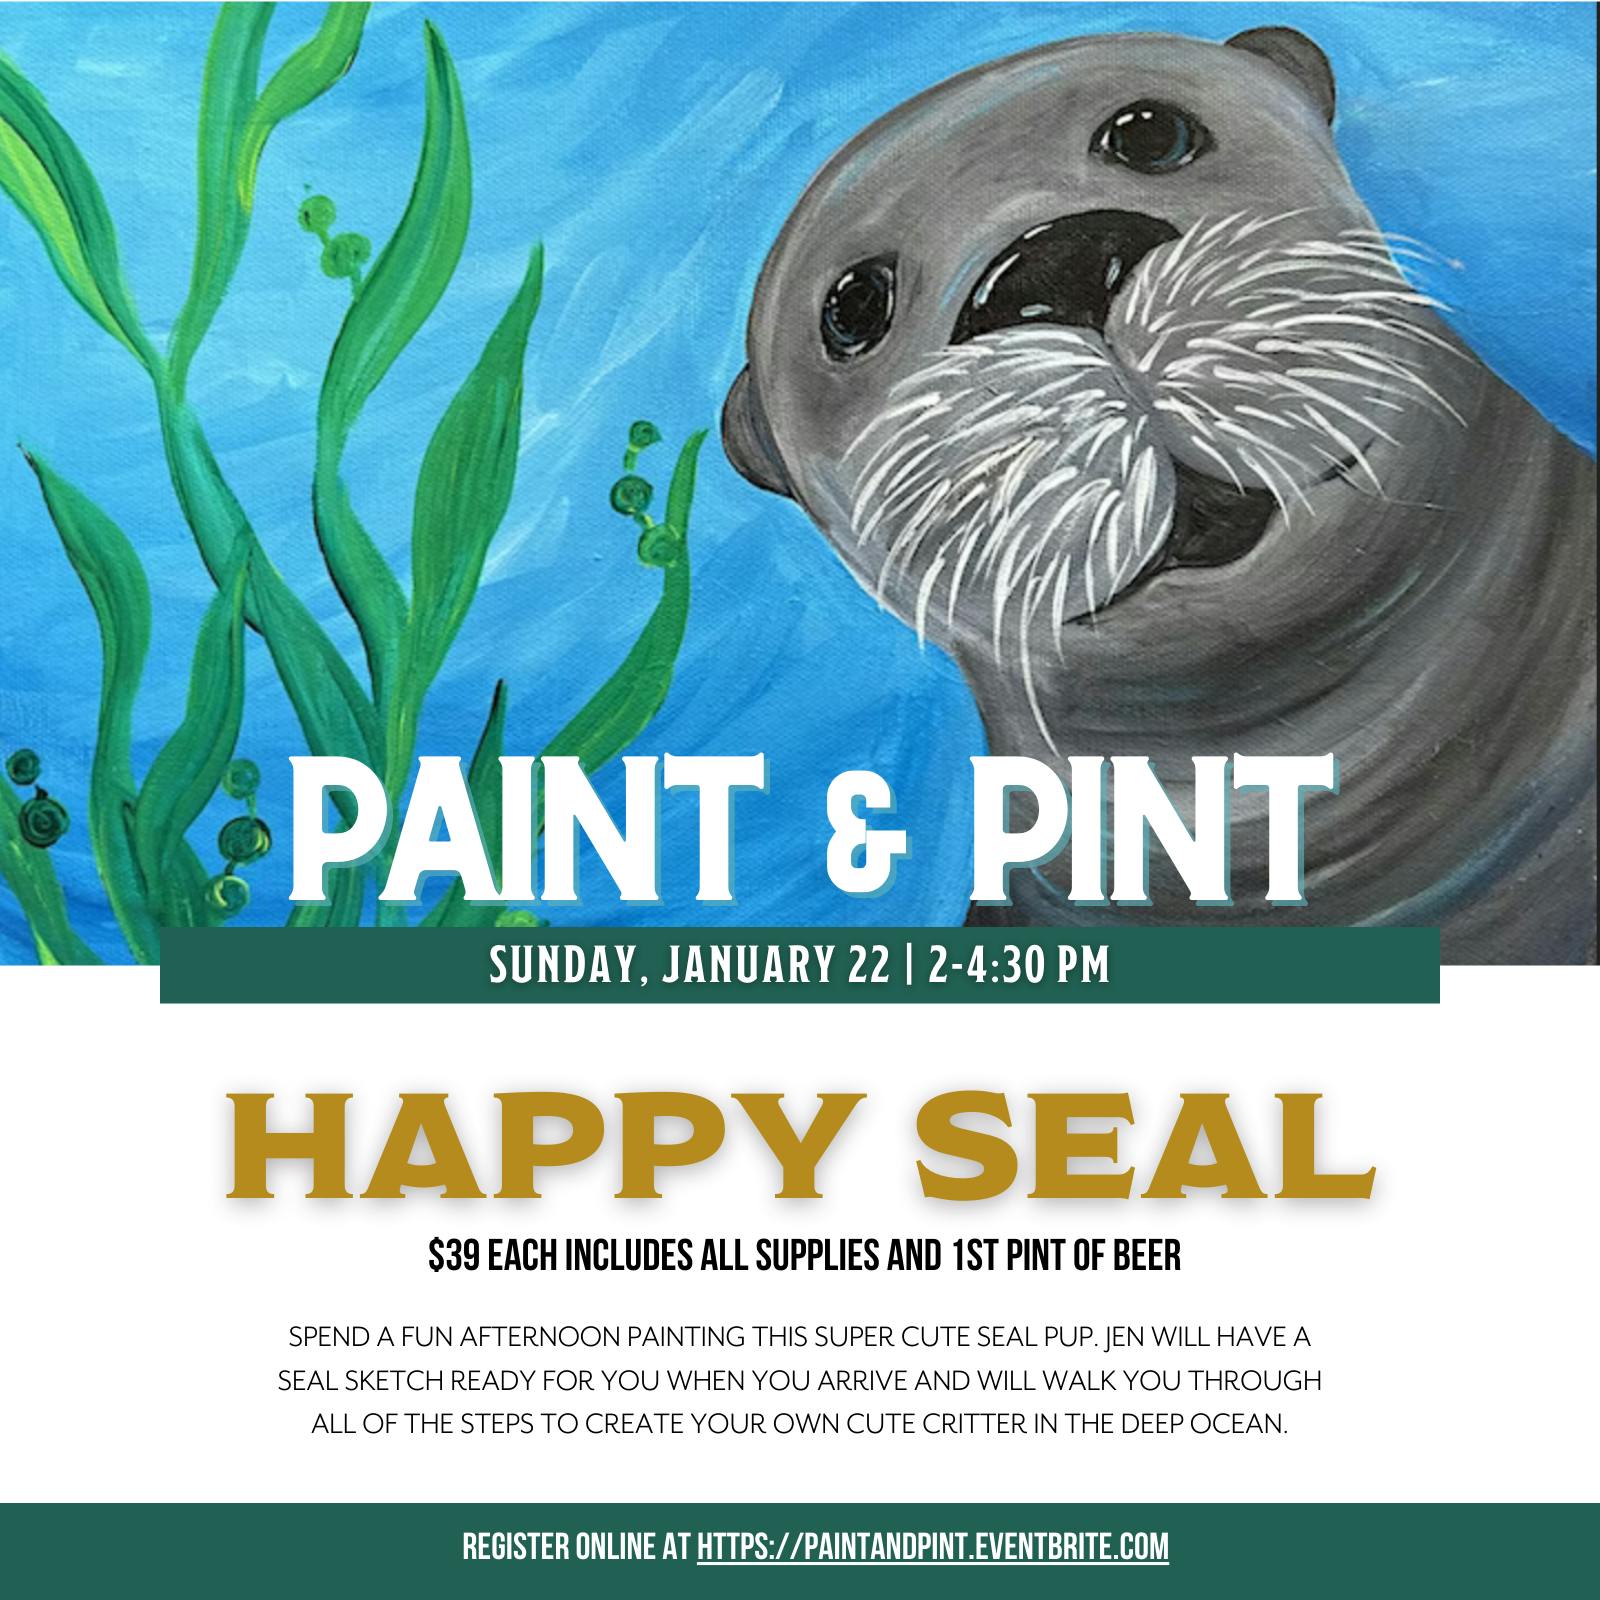 Happy Seal Paint & Pint at Poseidon Brewing Co